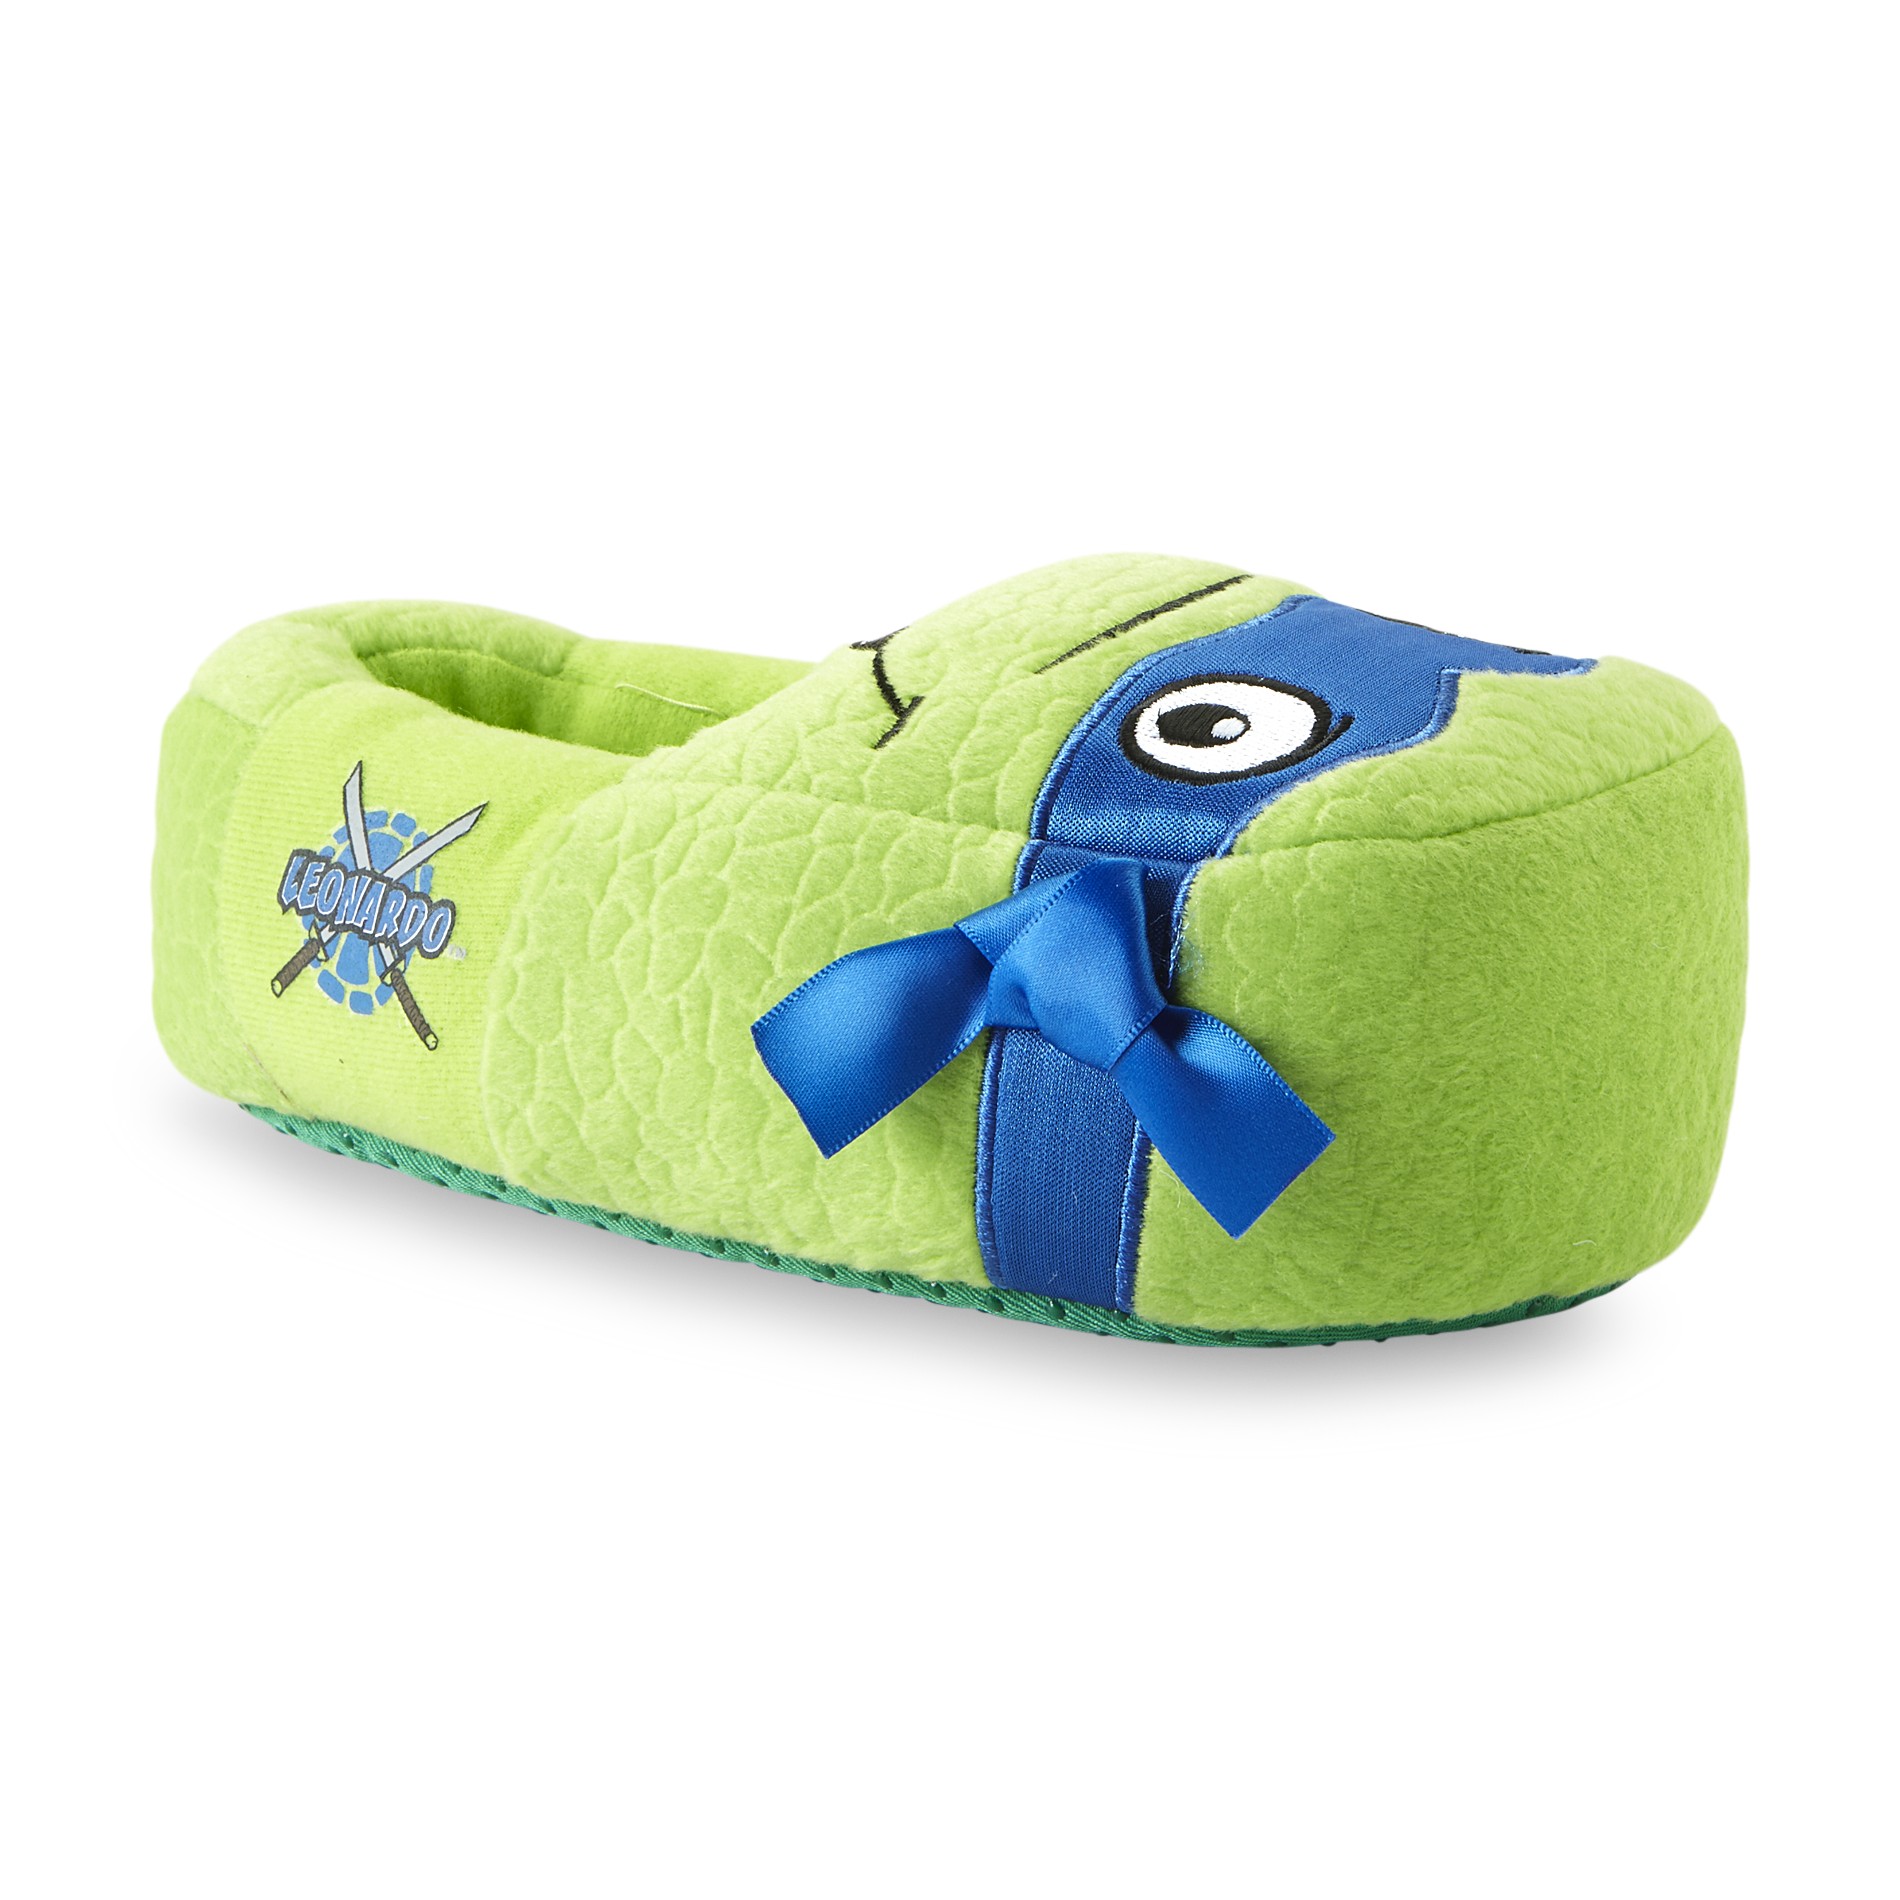 Nickelodeon Youth Boy's Green/Blue Slipper - Teenage Mutant Ninja Turtles